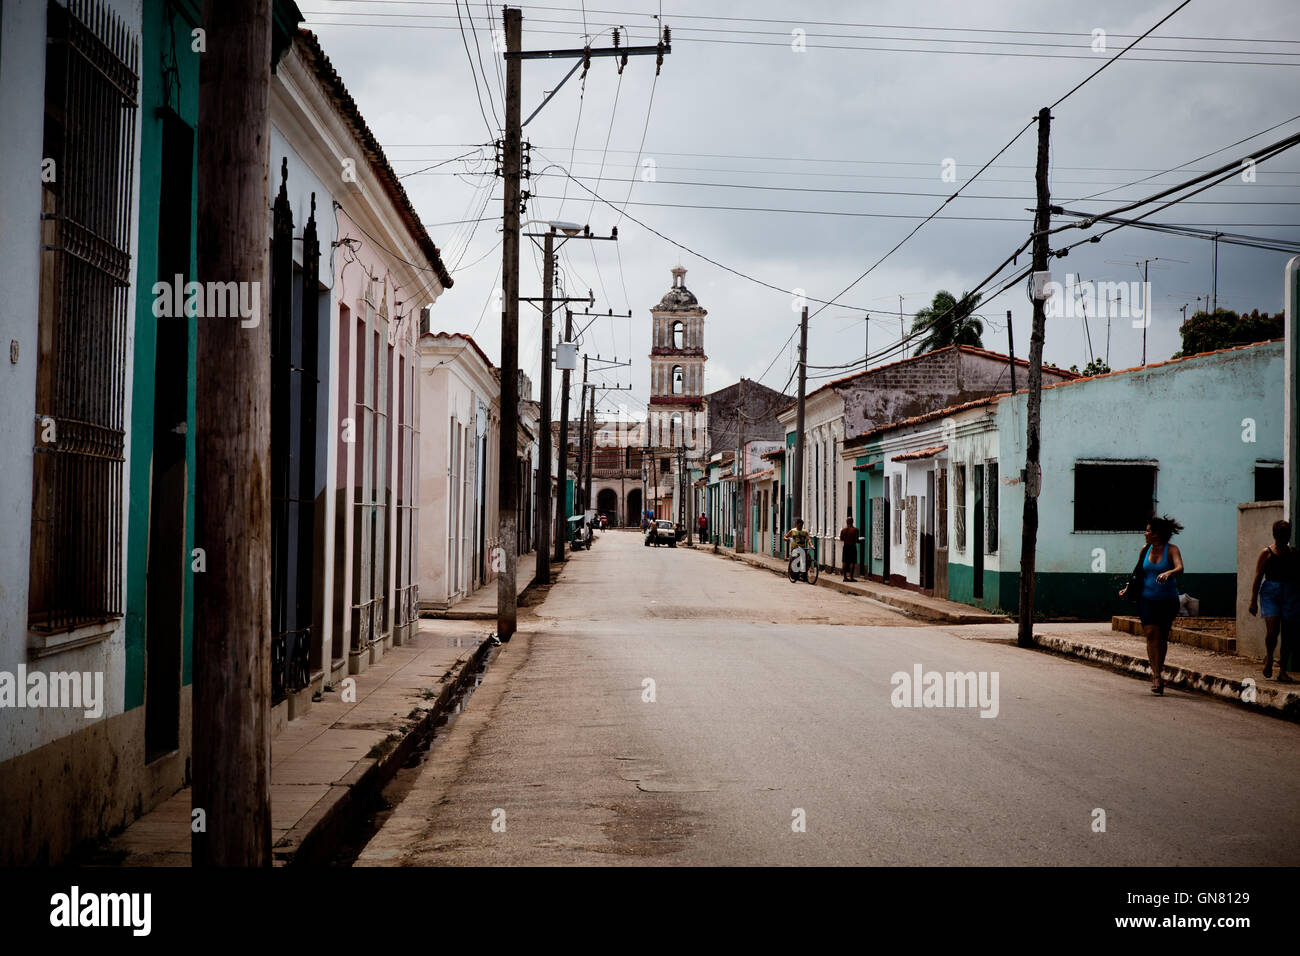 A street in Remedios, Cuba. Stock Photo